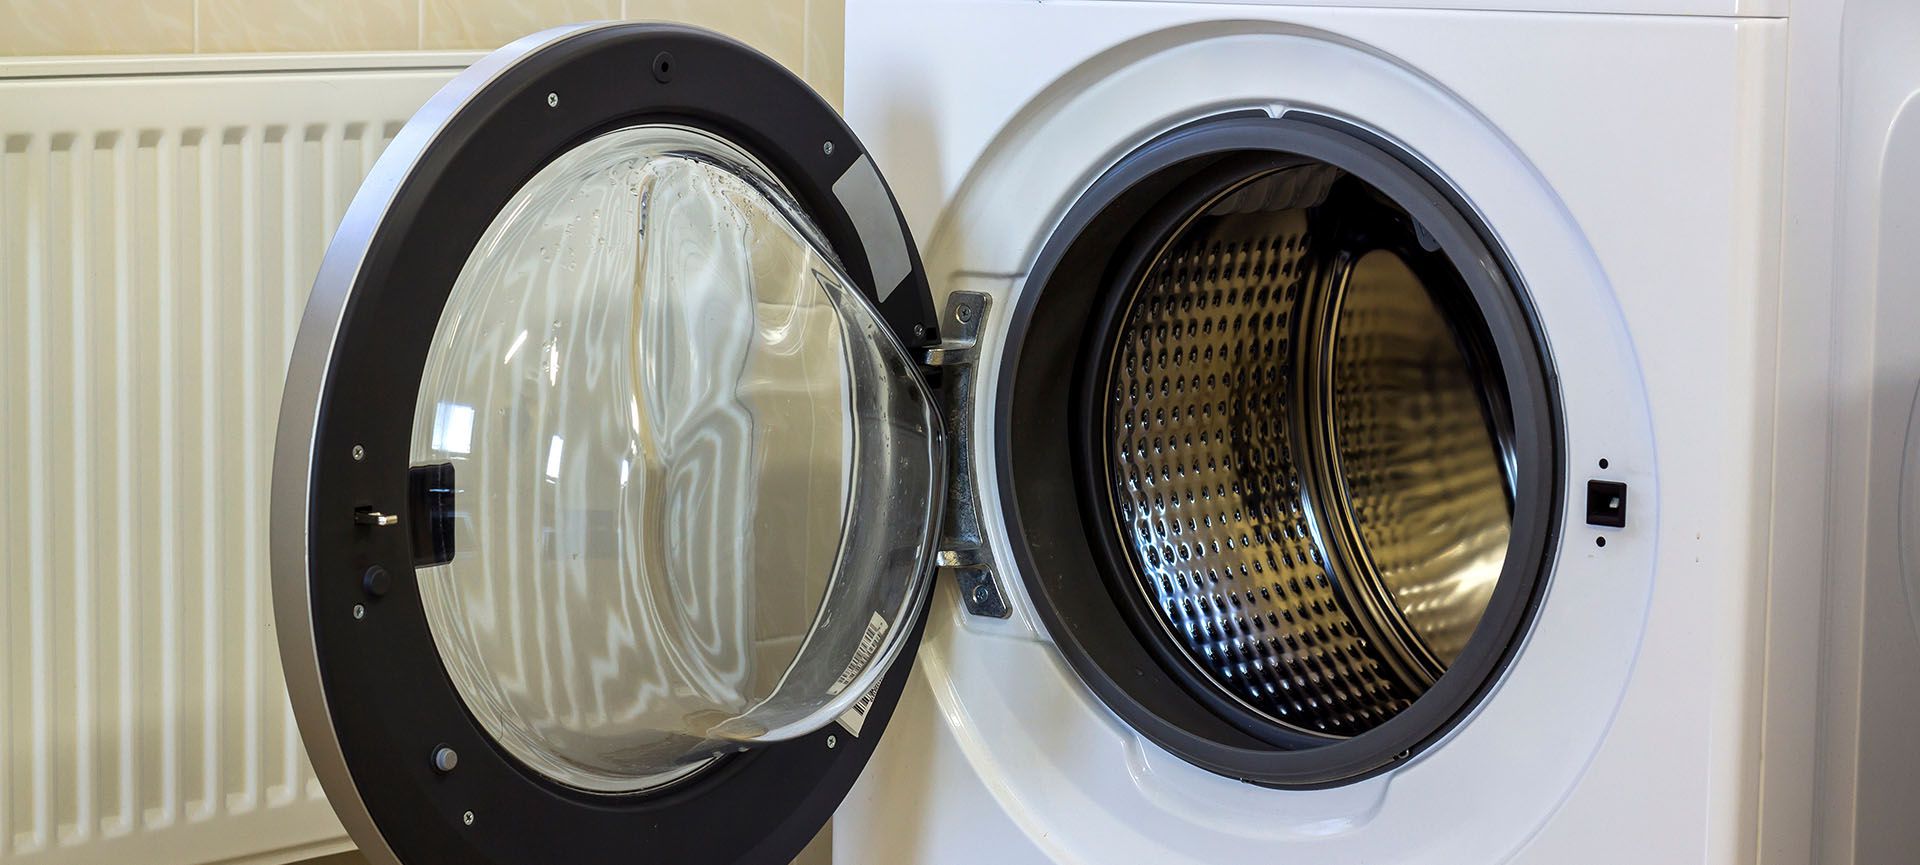 washing machine spin dryer